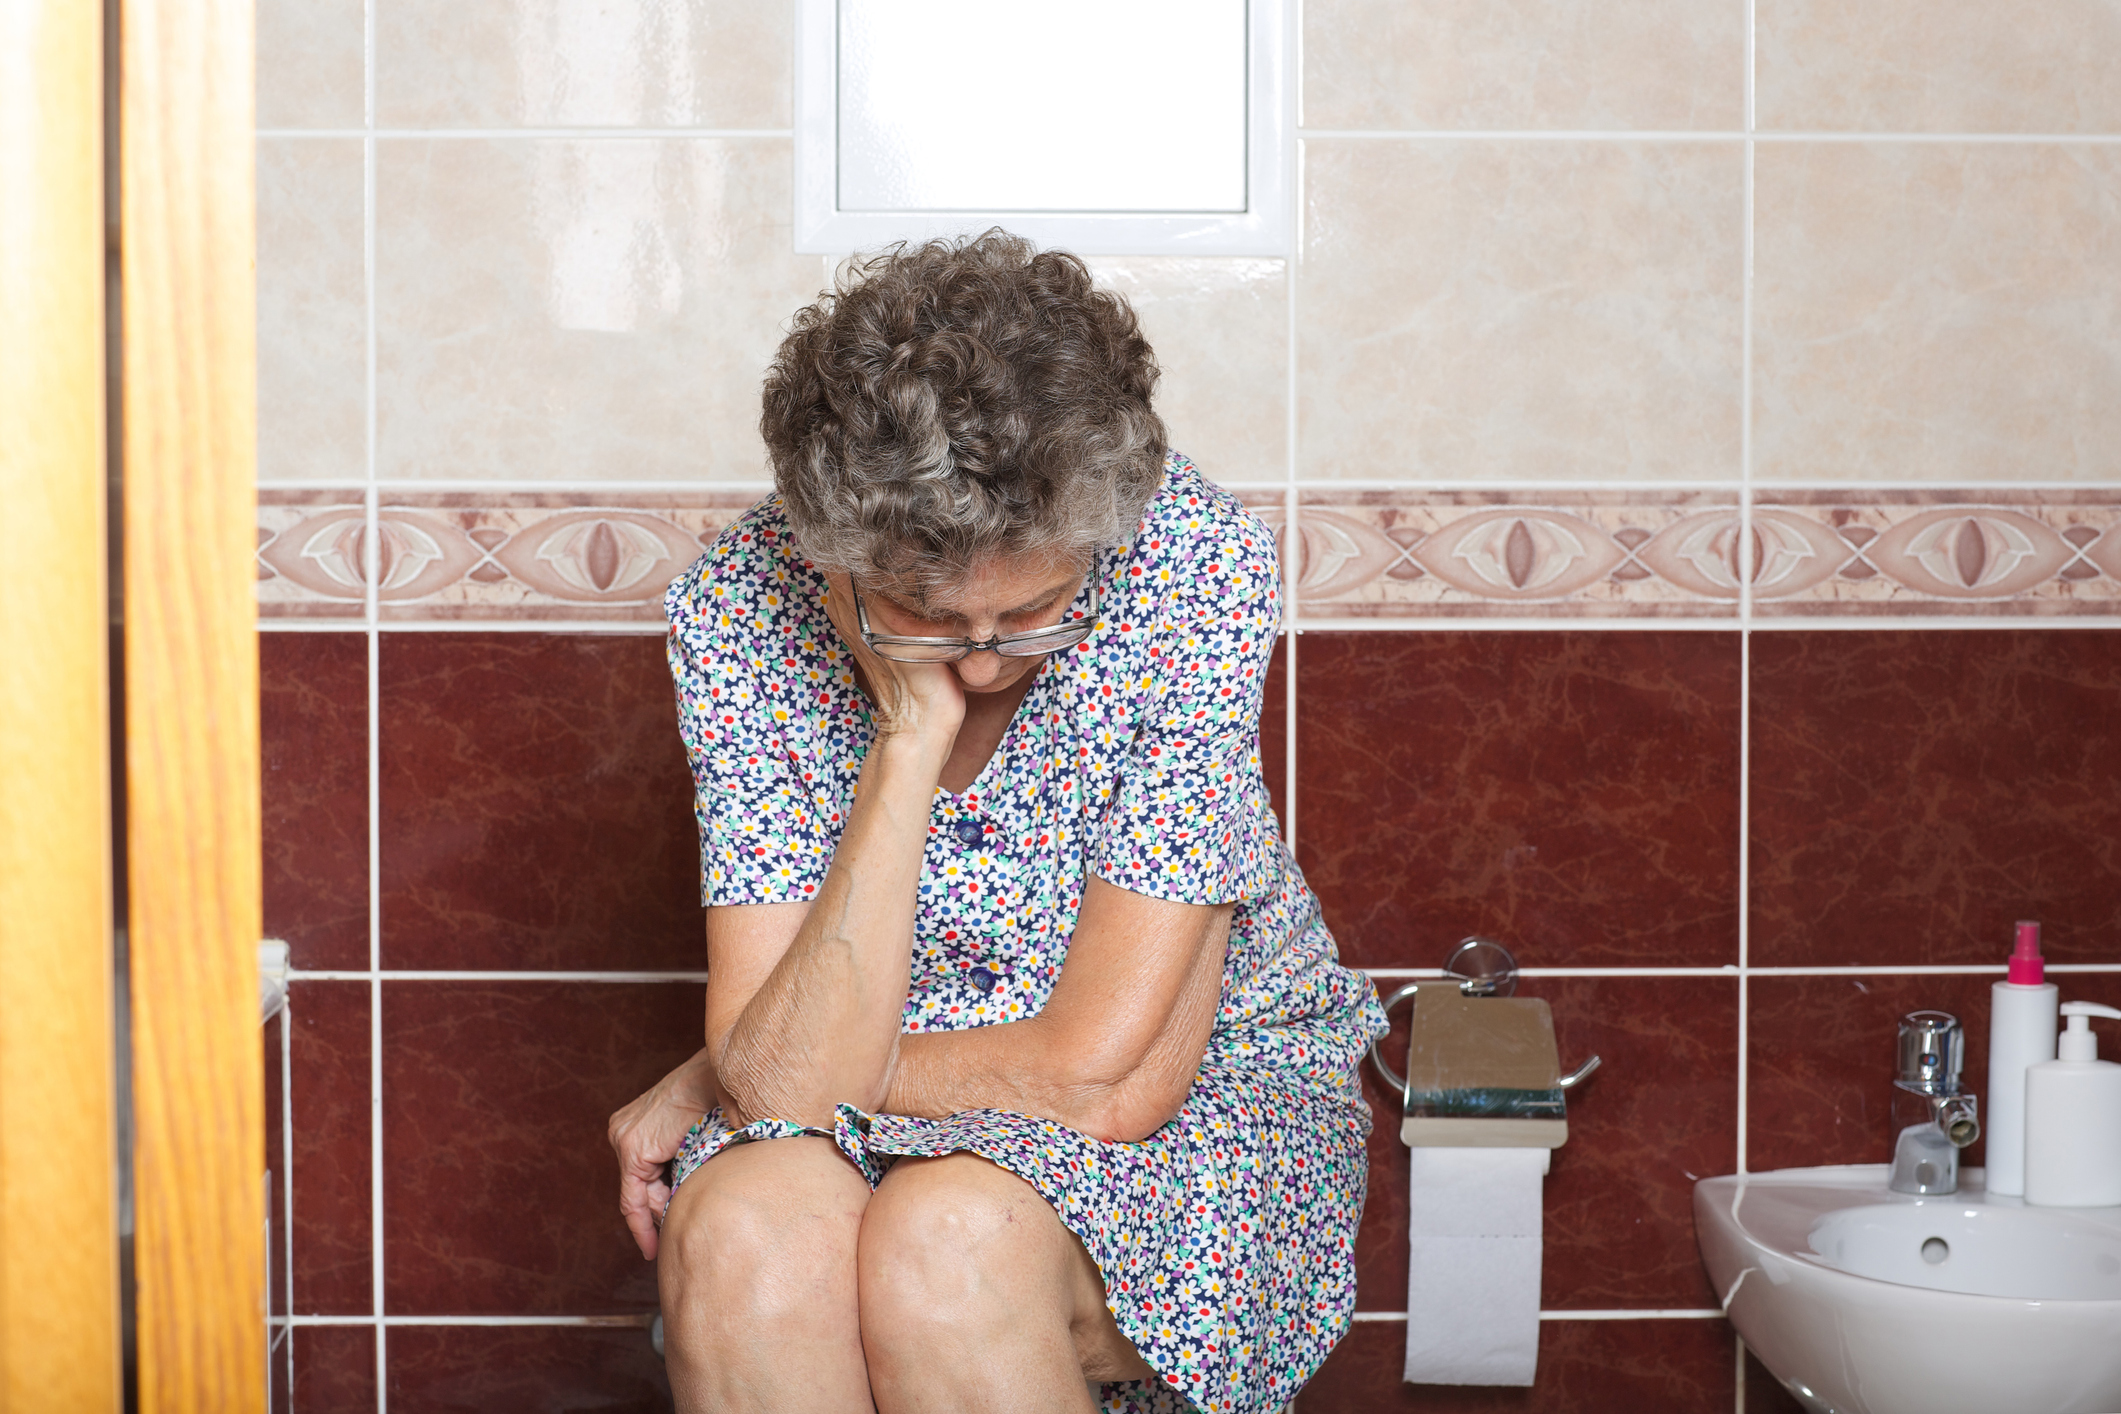 An elderly woman in bathroom